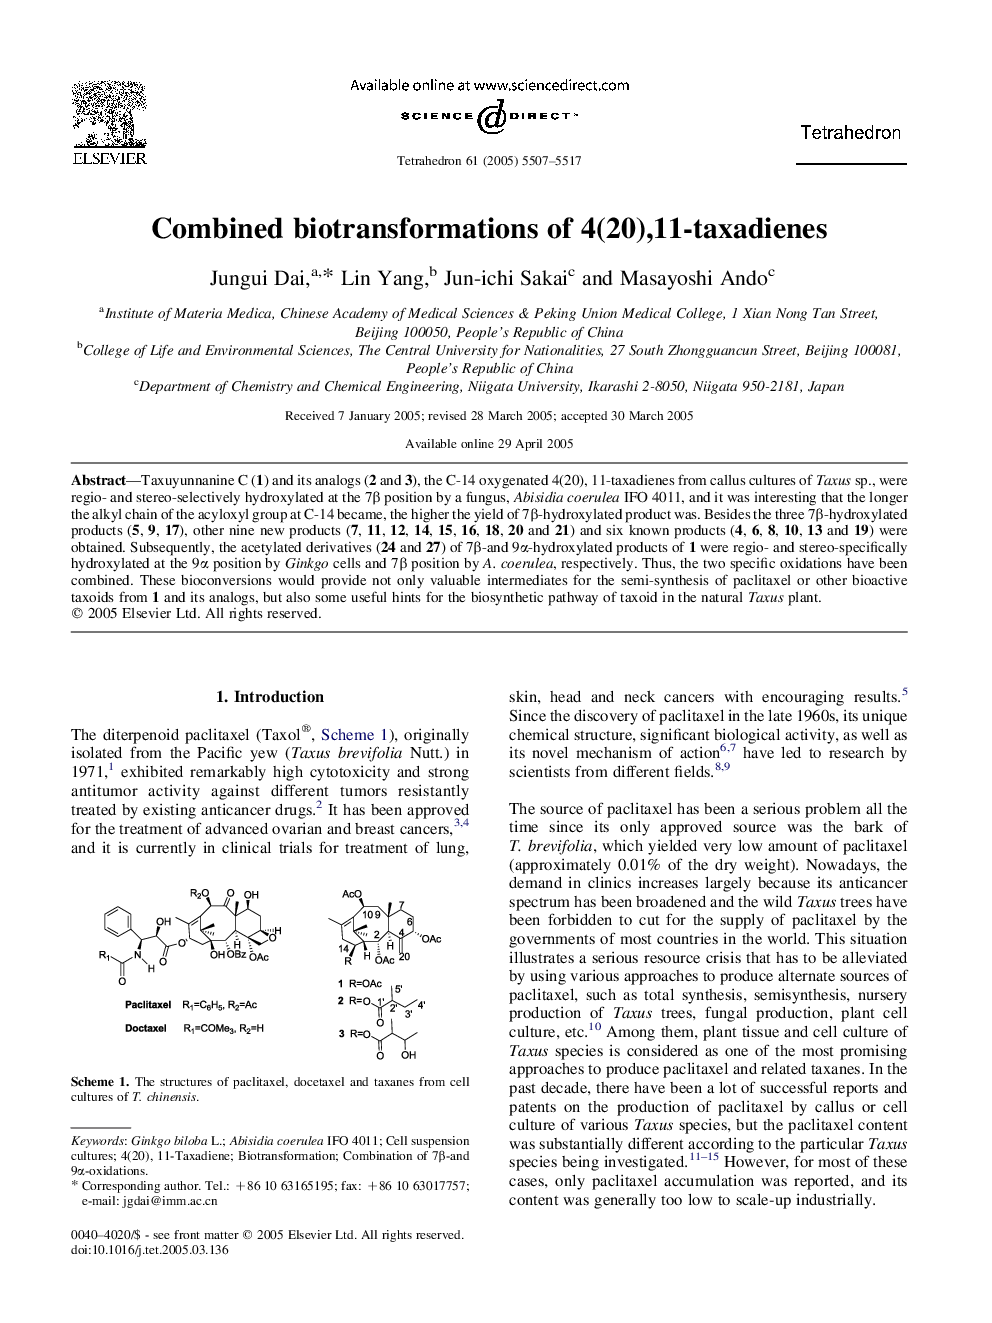 Combined biotransformations of 4(20),11-taxadienes